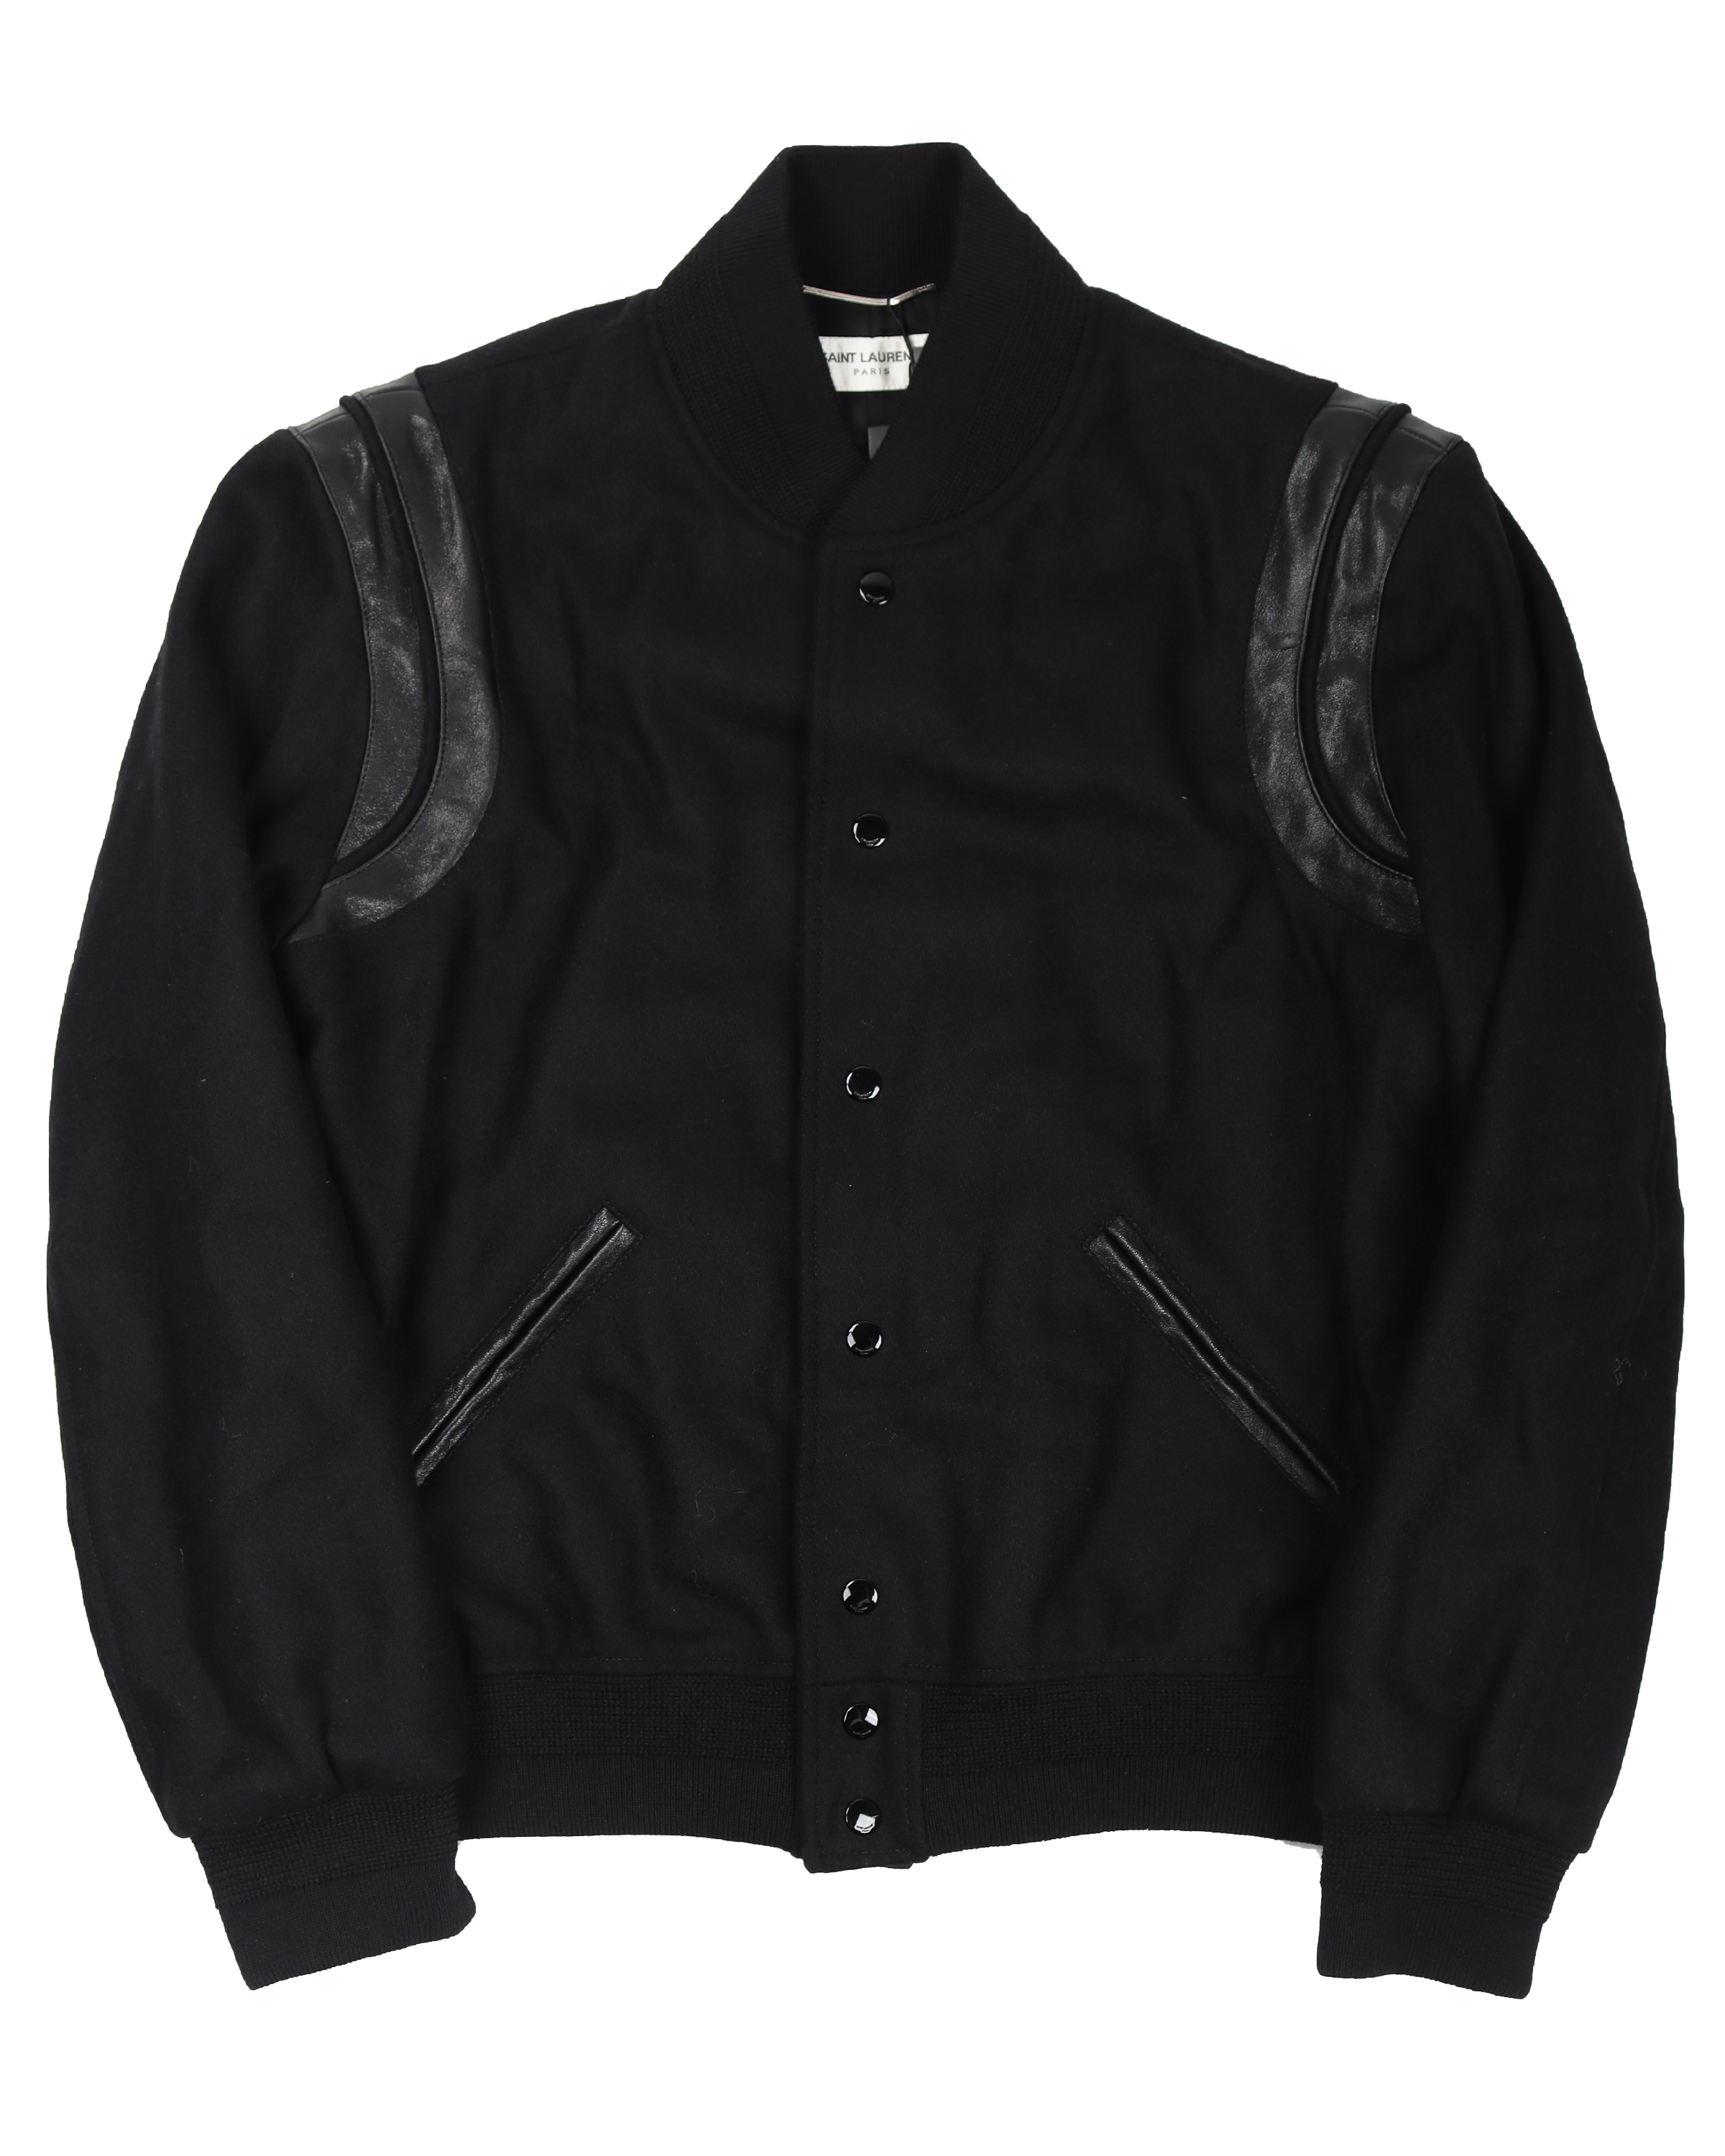 Saint Laurent Teddy Varsity Jacket: Get This Must-Have Before It